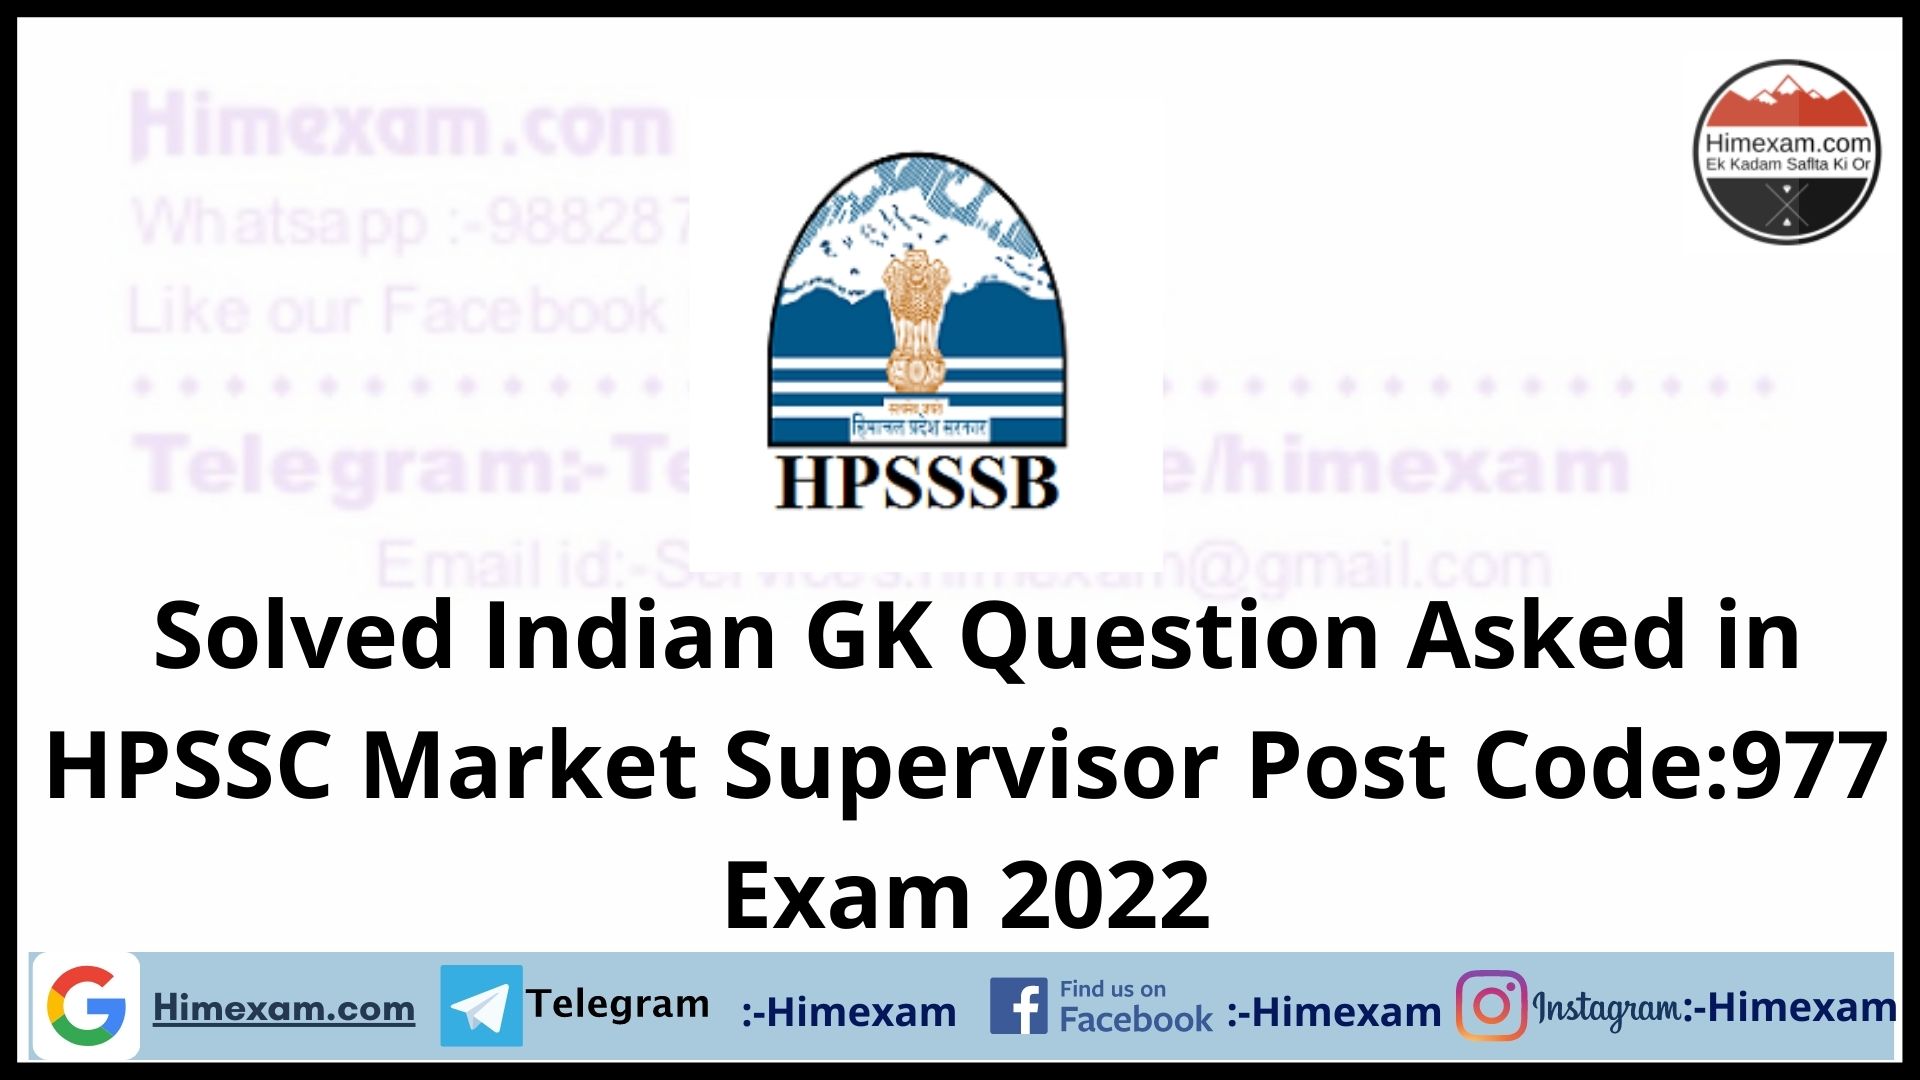 Solved Indian GK Question Asked in HPSSC Market Supervisor Post Code:977 Exam 2022